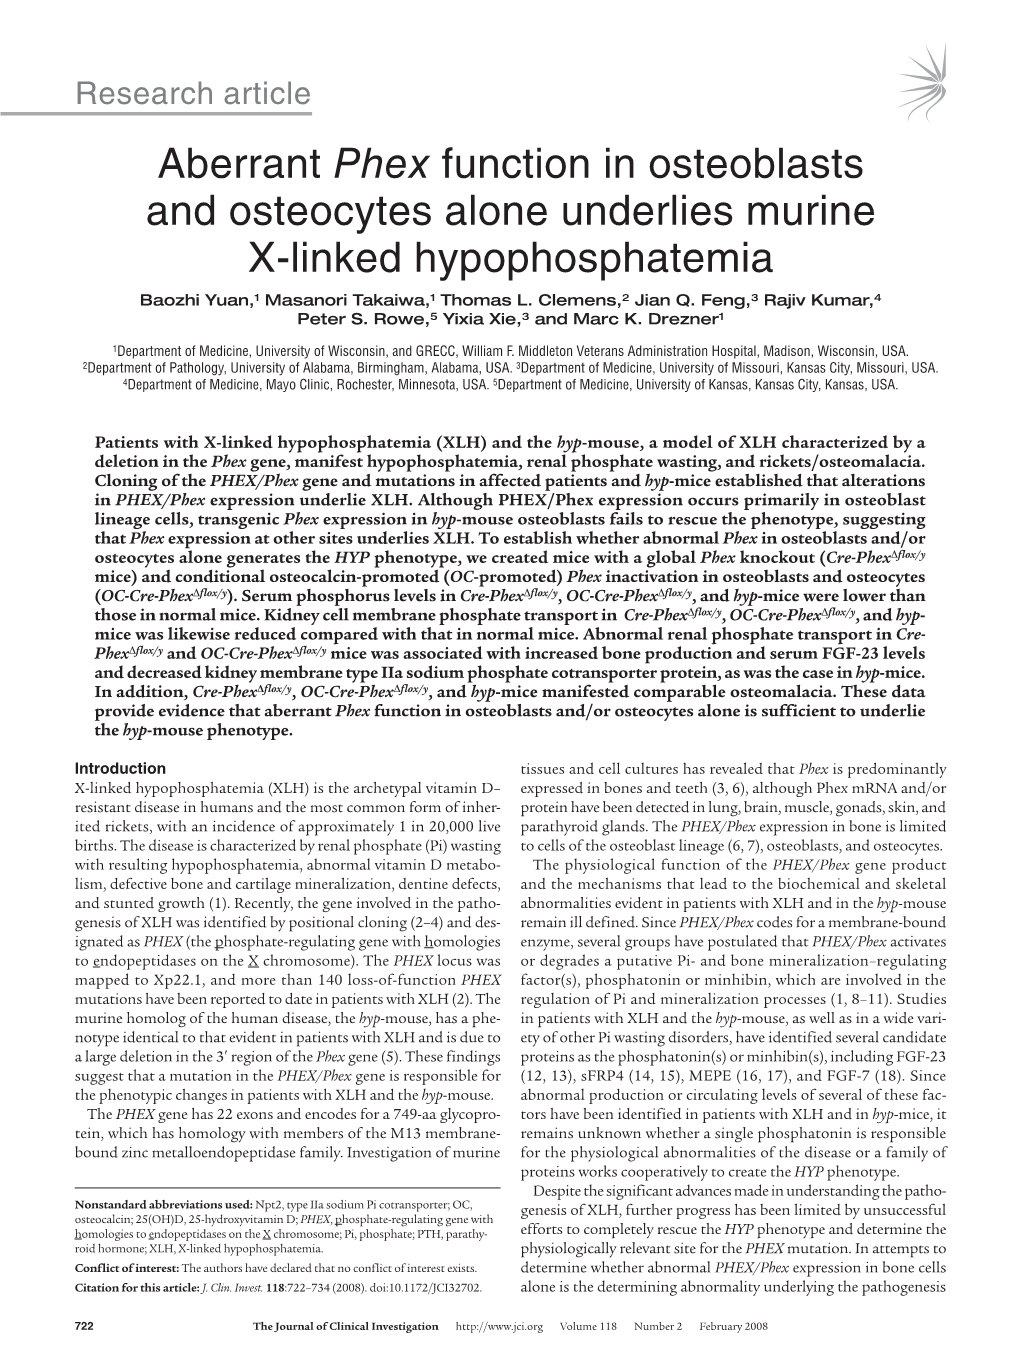 Aberrant Phex Function in Osteoblasts and Osteocytes Alone Underlies Murine X-Linked Hypophosphatemia Baozhi Yuan,1 Masanori Takaiwa,1 Thomas L